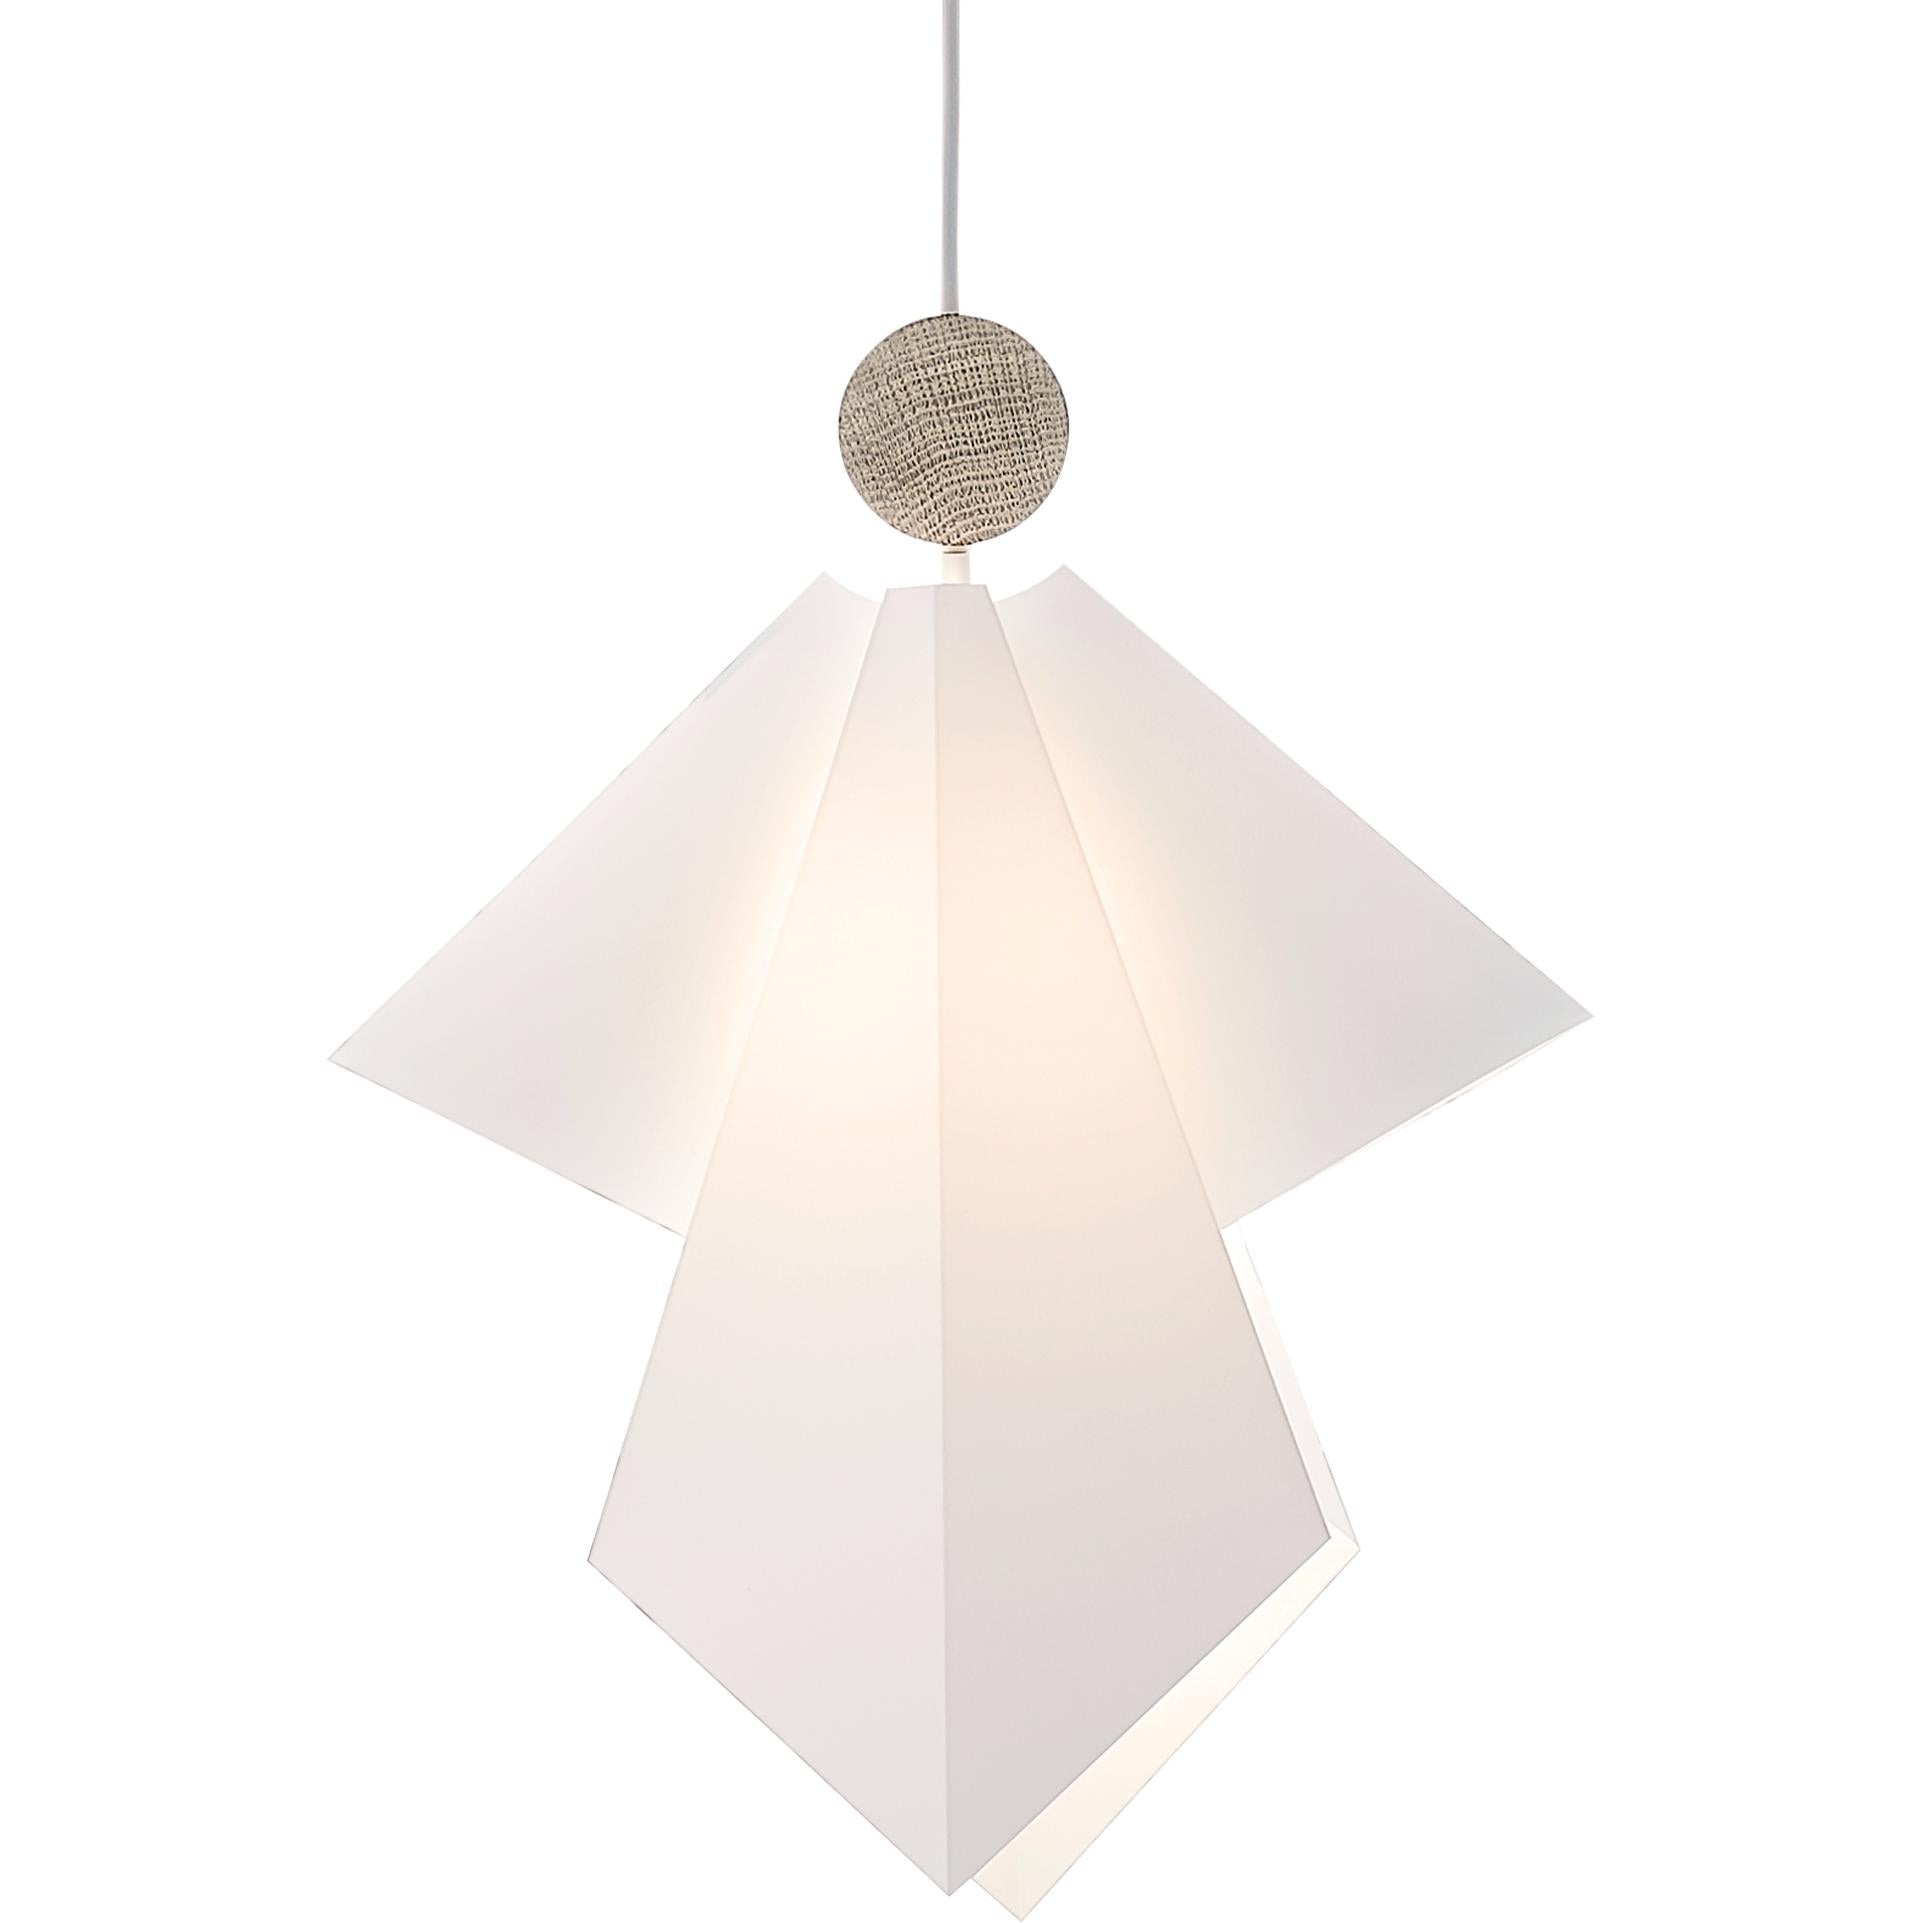 Le Klint Gabriel Engel hanger lamp, xl